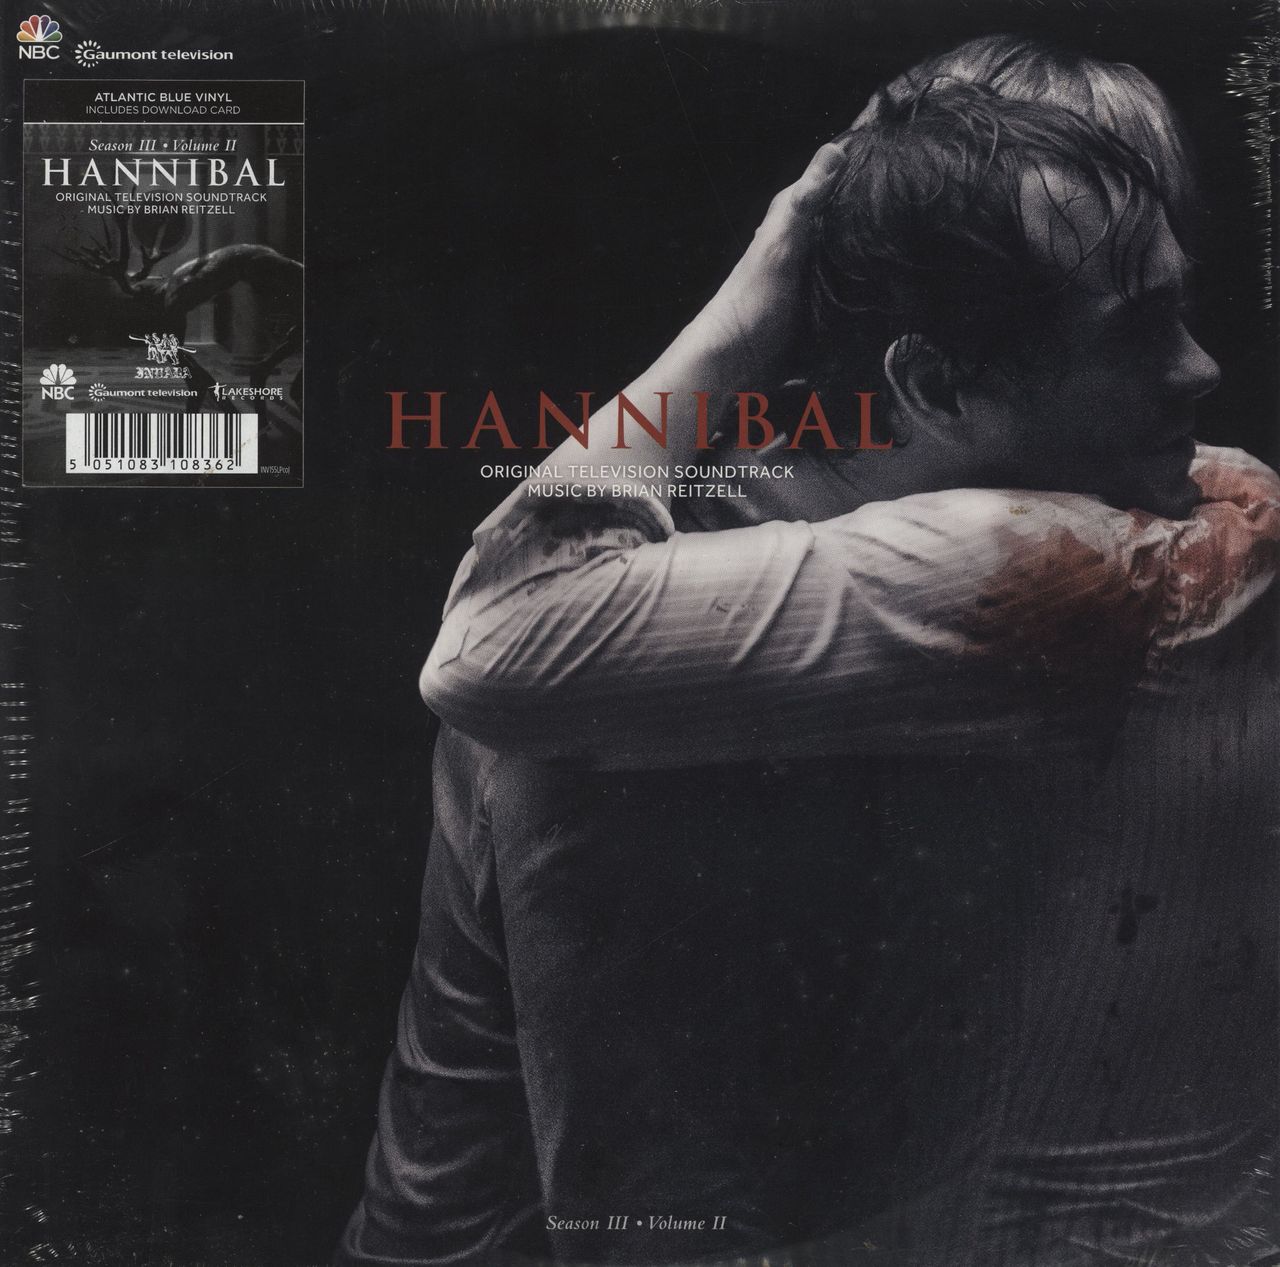 Original Soundtrack Hannibal: Season III [Volume II] - Atlantic Blue Vinyl - Sealed UK 2-LP vinyl record set (Double LP Album) INV155LPCOL